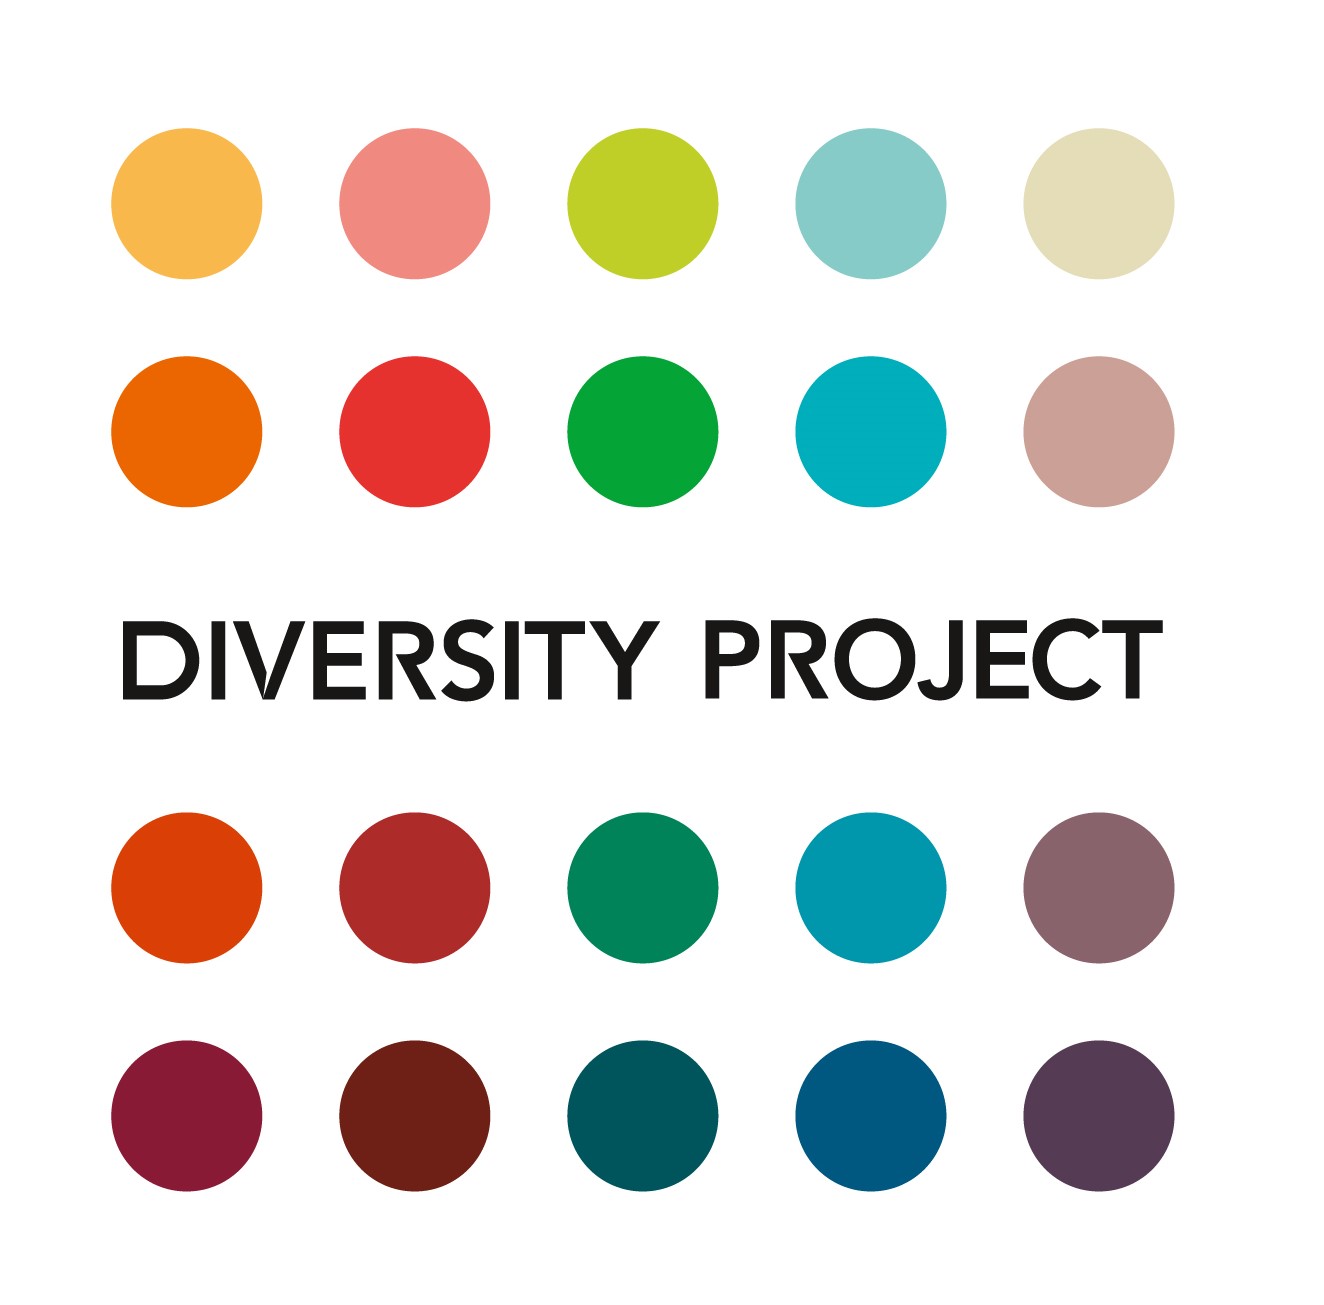 Diversity Project logo